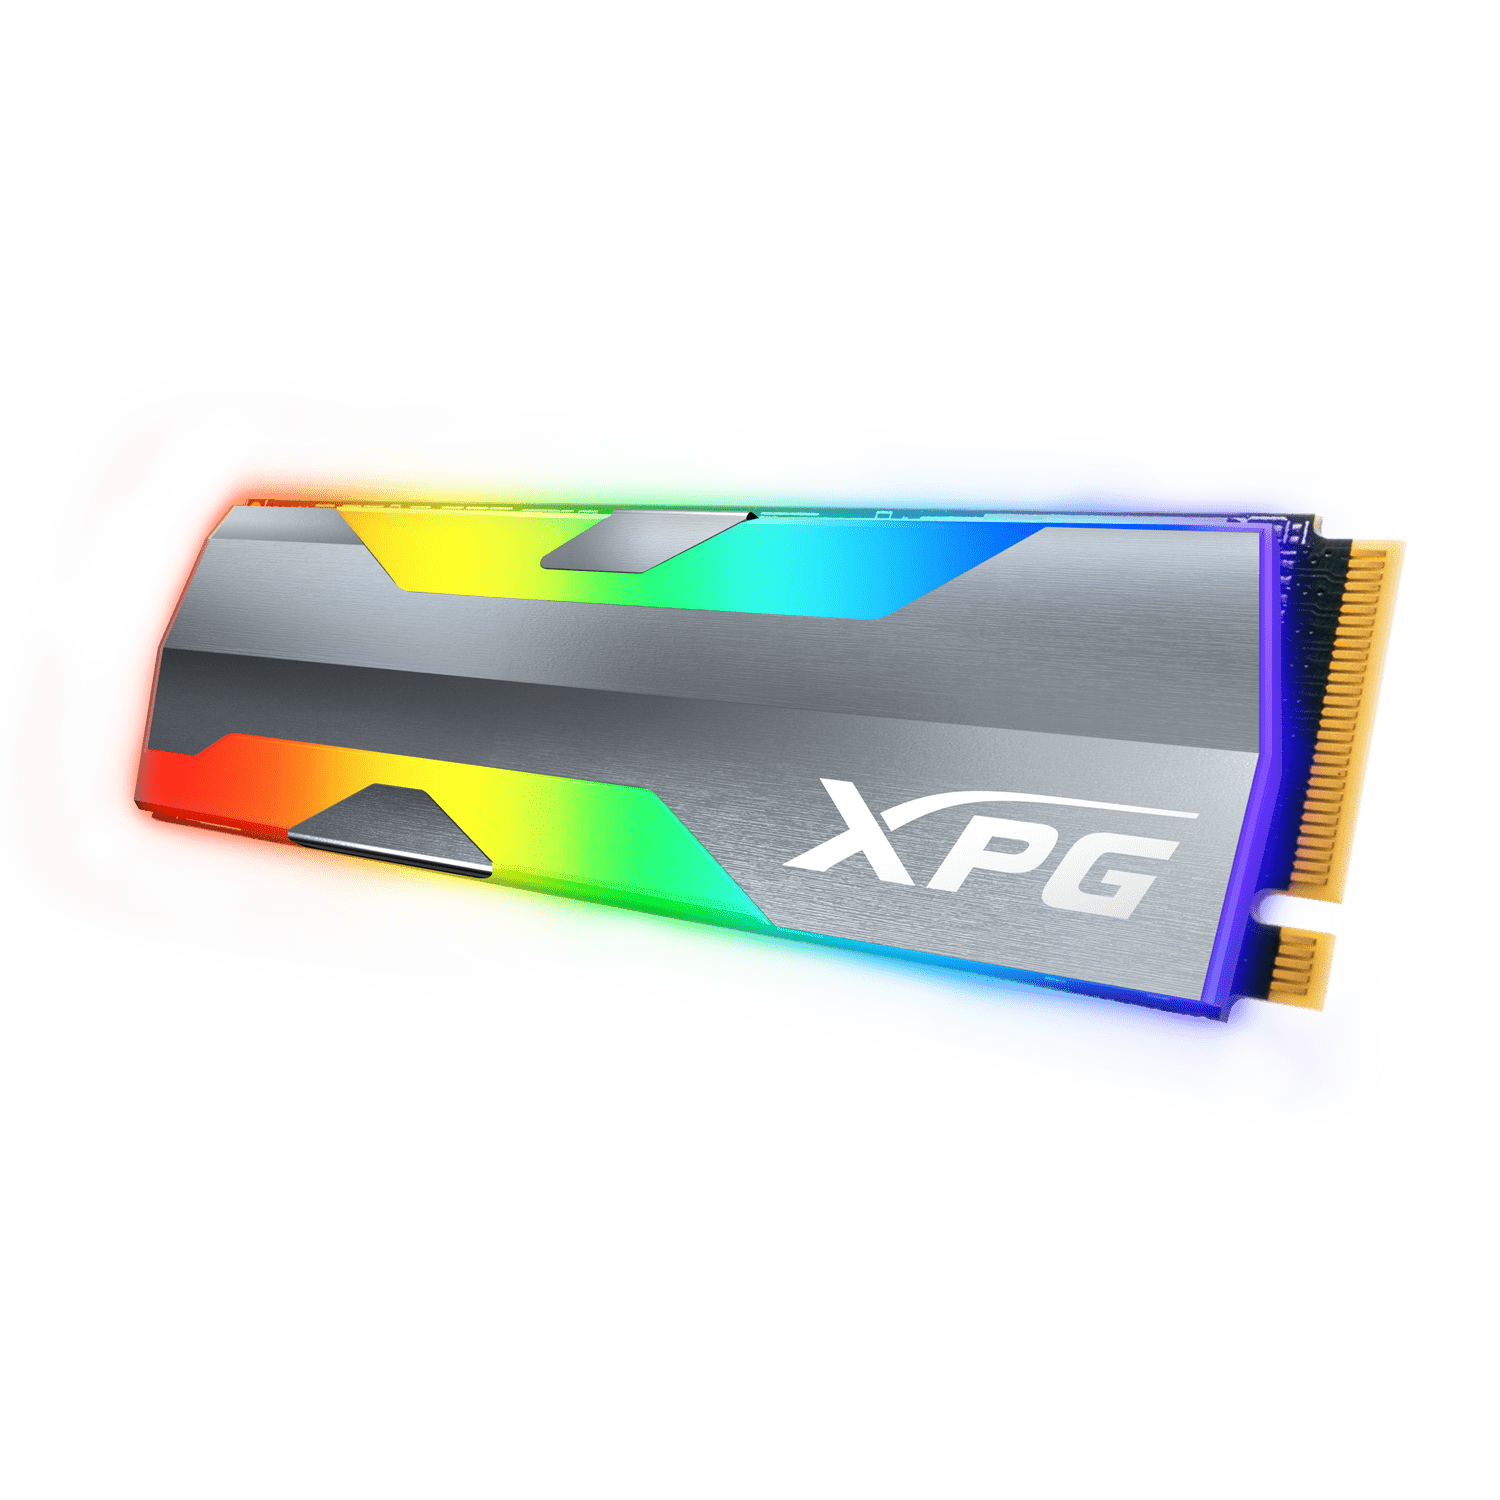 Disco De Estado Solido SSD 500Gb Adata M2 Nvme Spectrix XPG S20G RGB